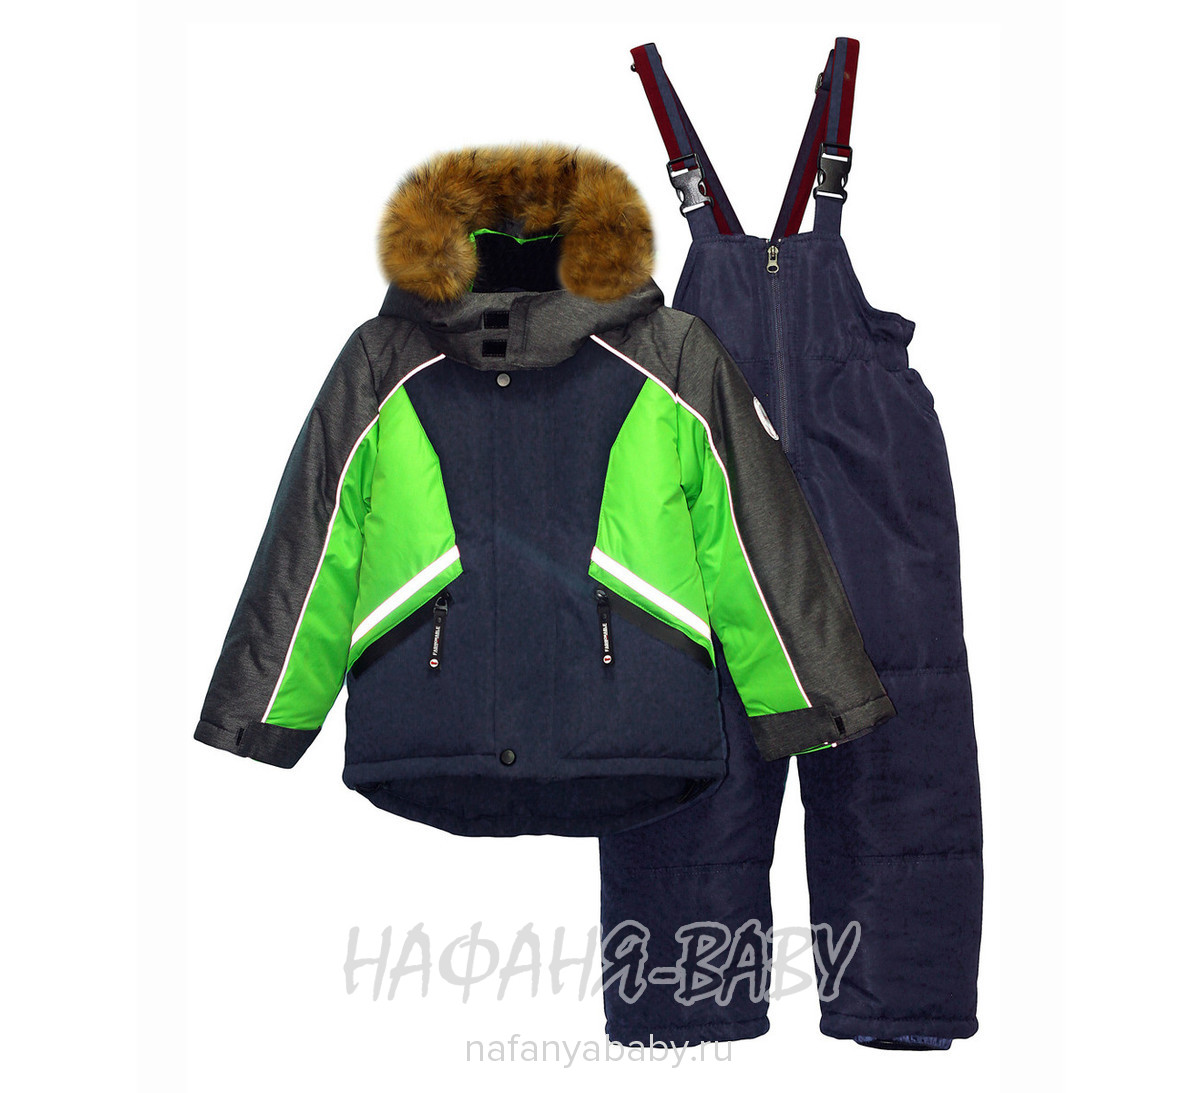 Зимний костюм (куртка+полукомбинезон) WEISHIDO арт: 946, 1-4 года, 0-12 мес, оптом Китай (Пекин)